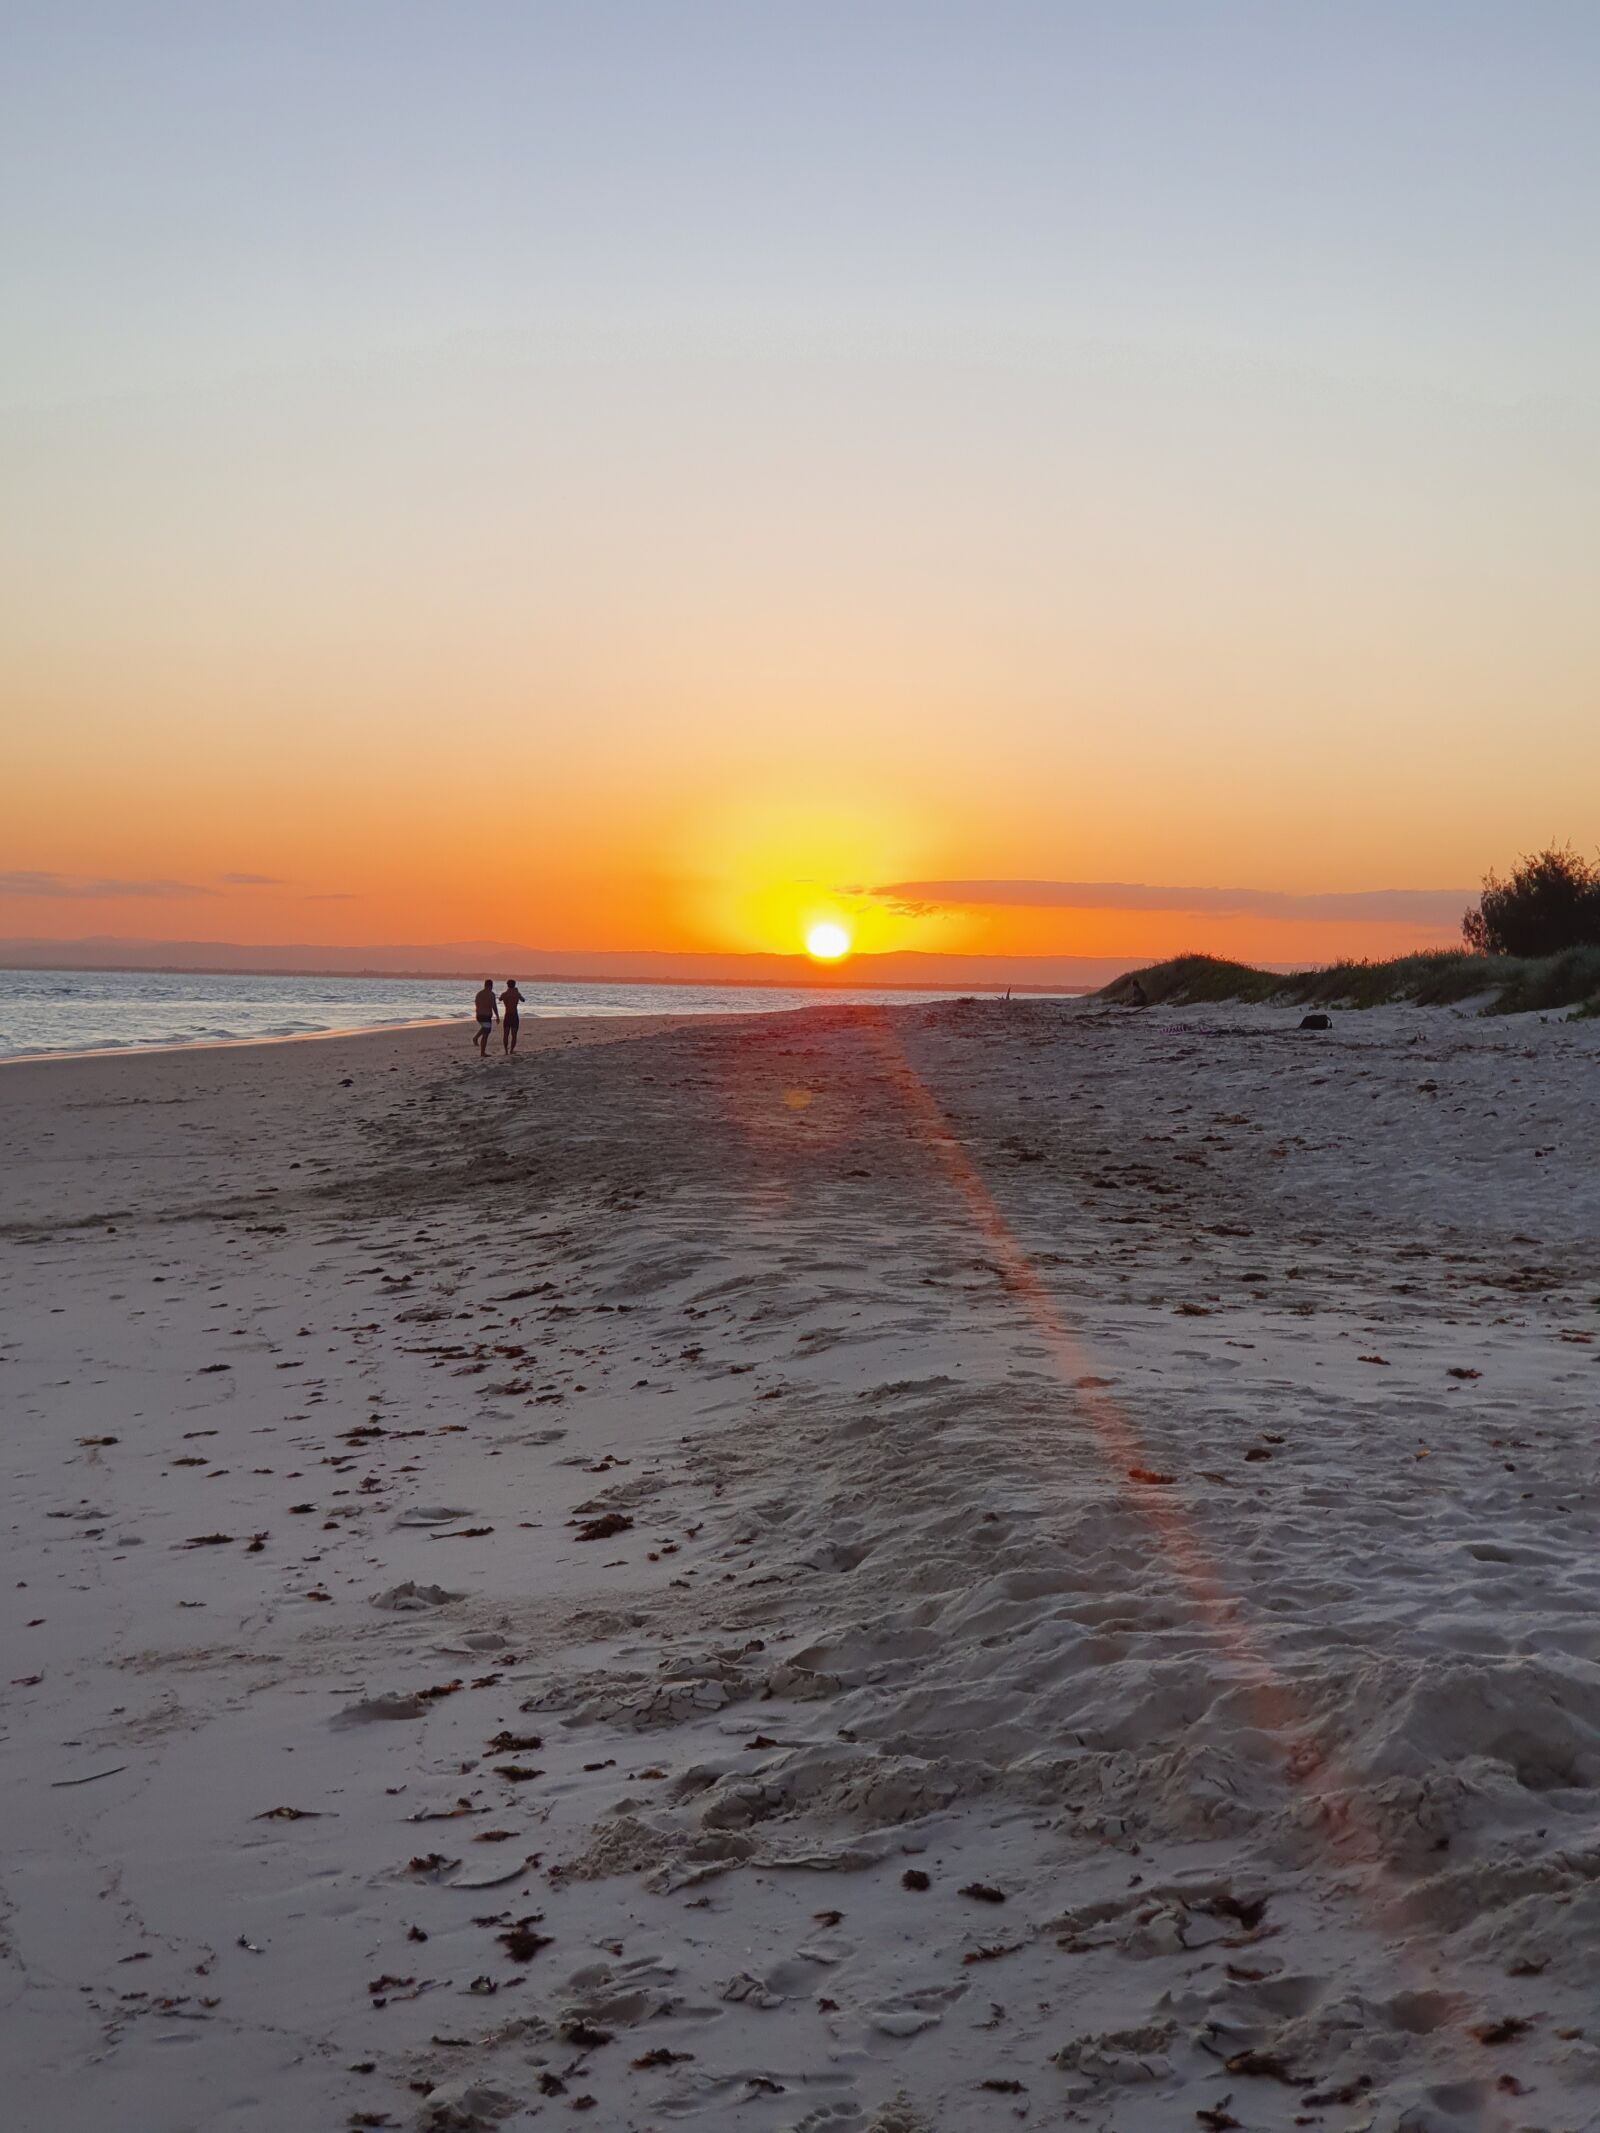 Samsung Galaxy S10+ sample photo. Sunset, beach, seascape photography